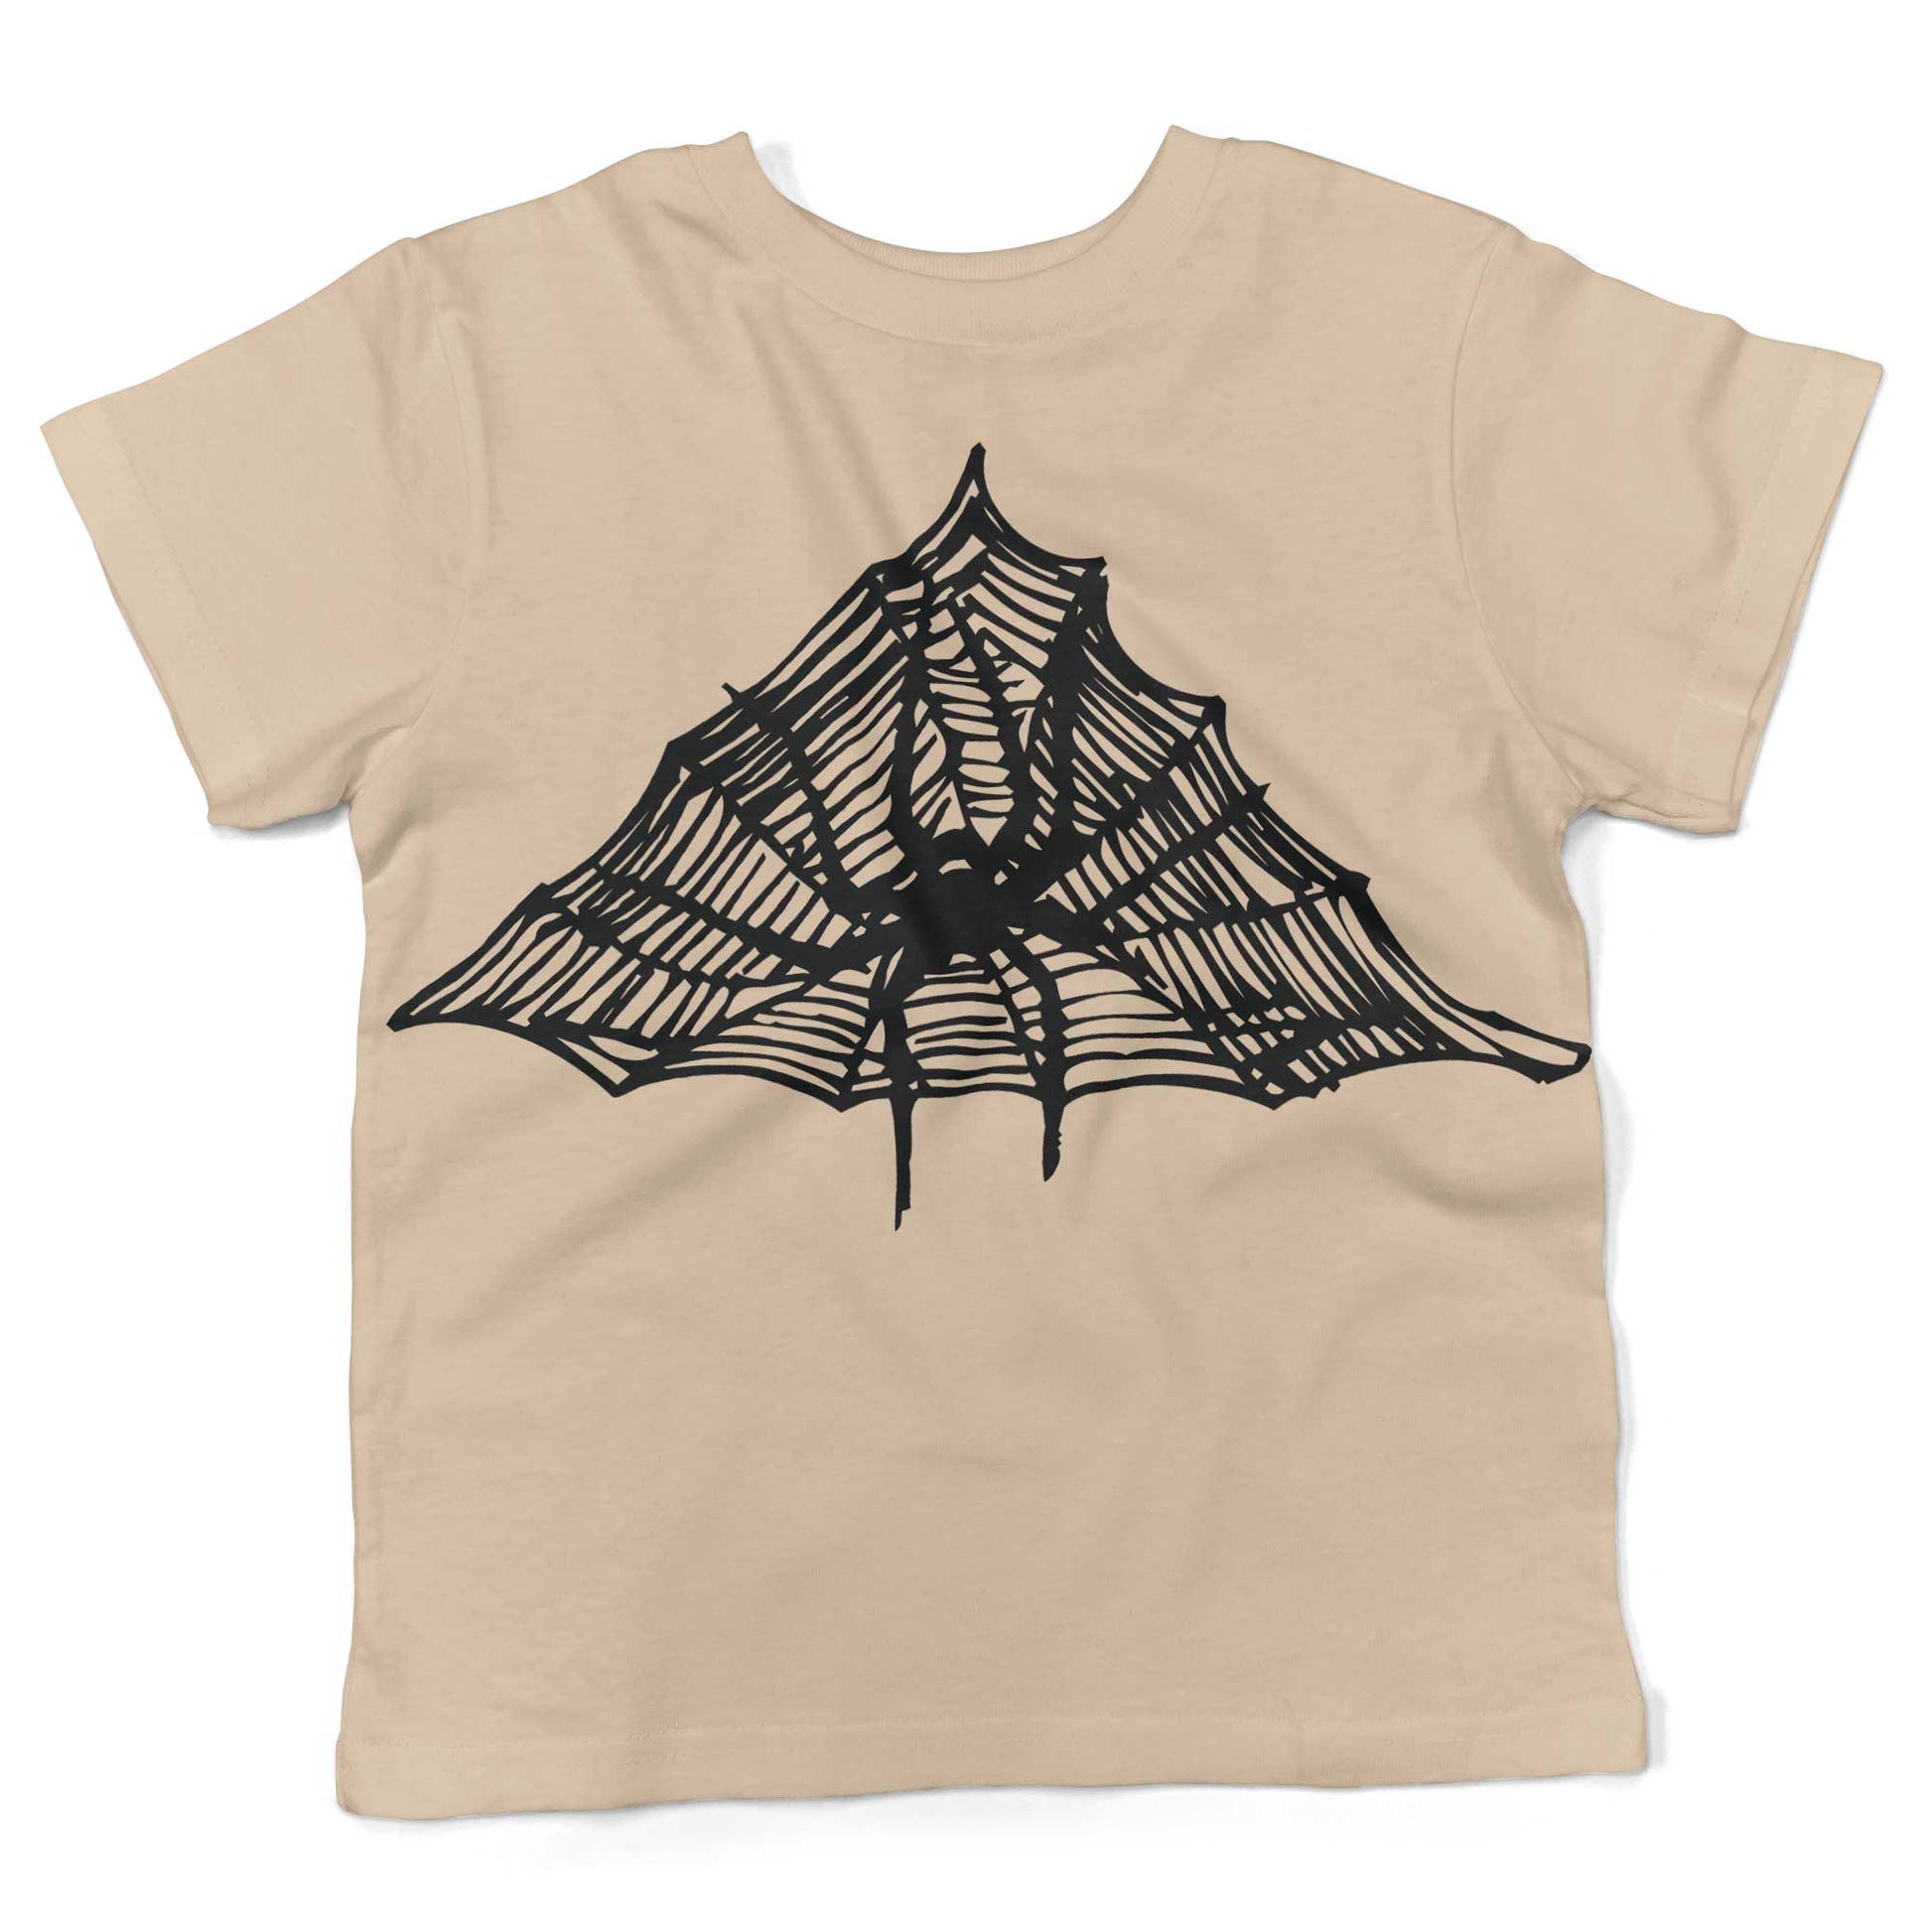 Spiderweb Toddler Shirt-Organic Natural-2T